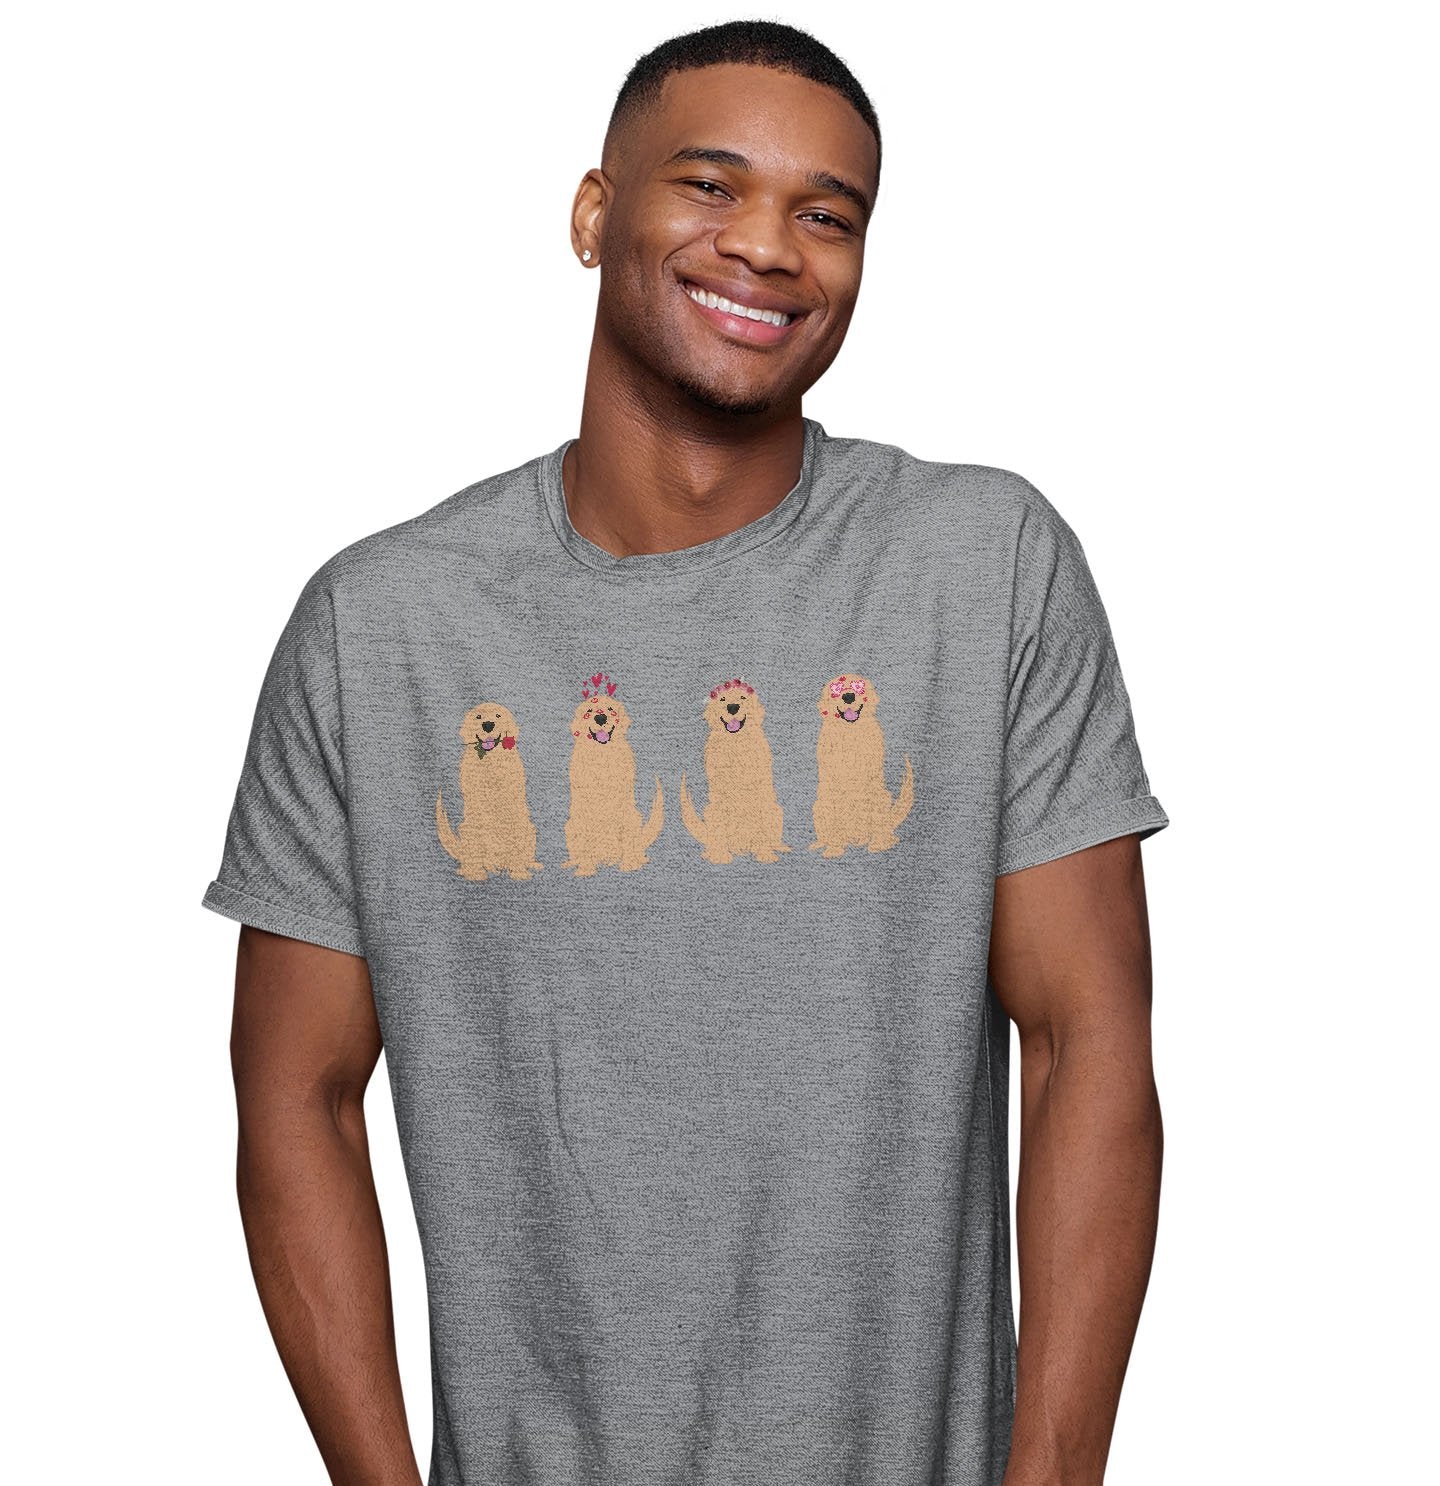 Golden Love Line Up - Adult Unisex T-Shirt